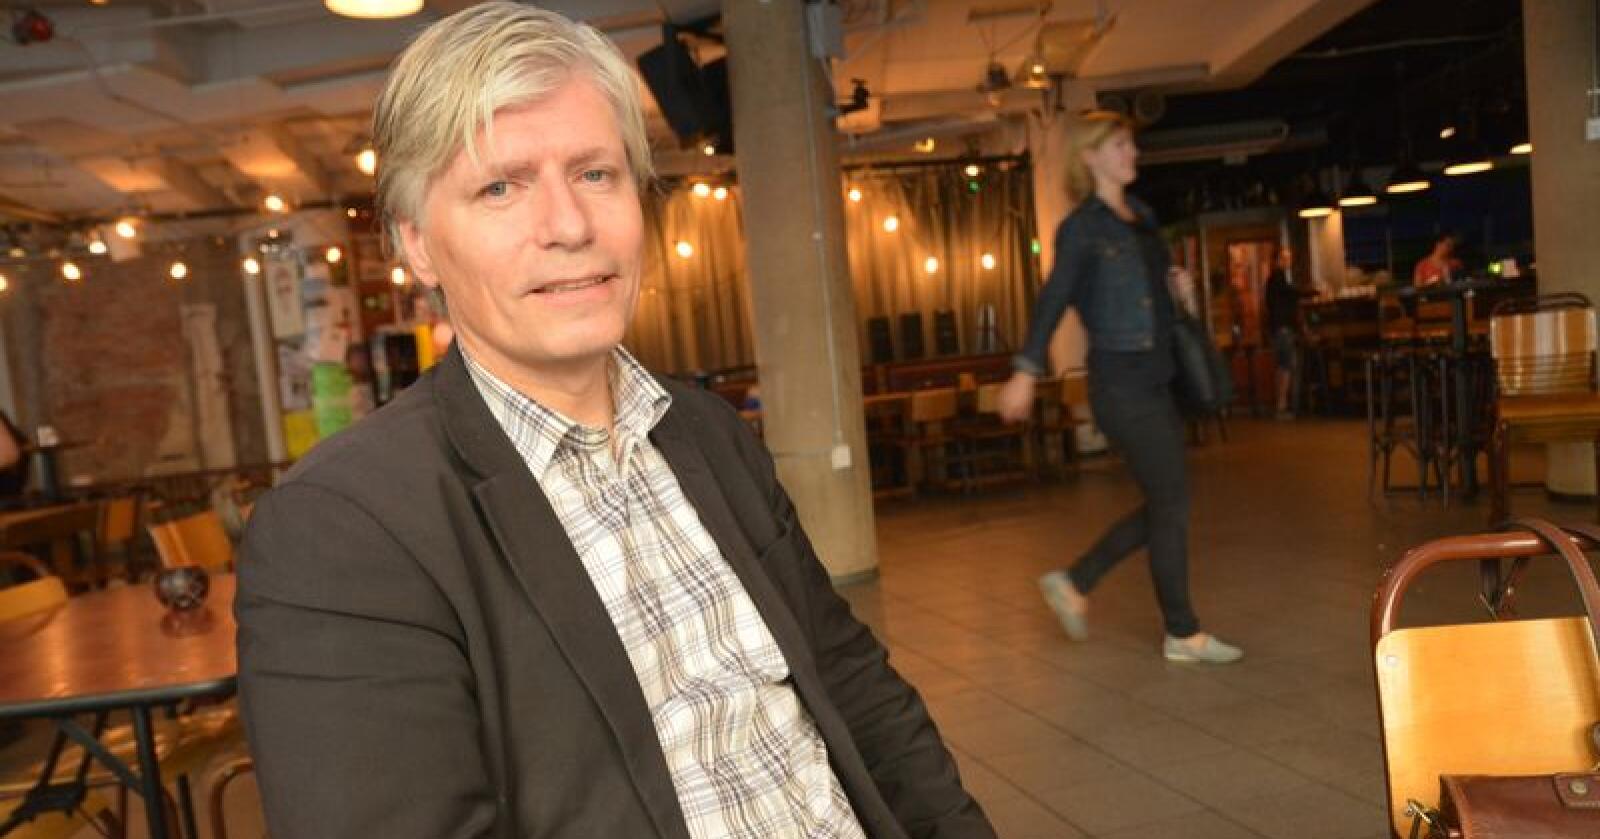 Nestleder Ola Elvestuen i Venstre er ny klima- og miljøminister. Bildet er tatt ved en tidligere anledning. Foto: Anders Sandbu